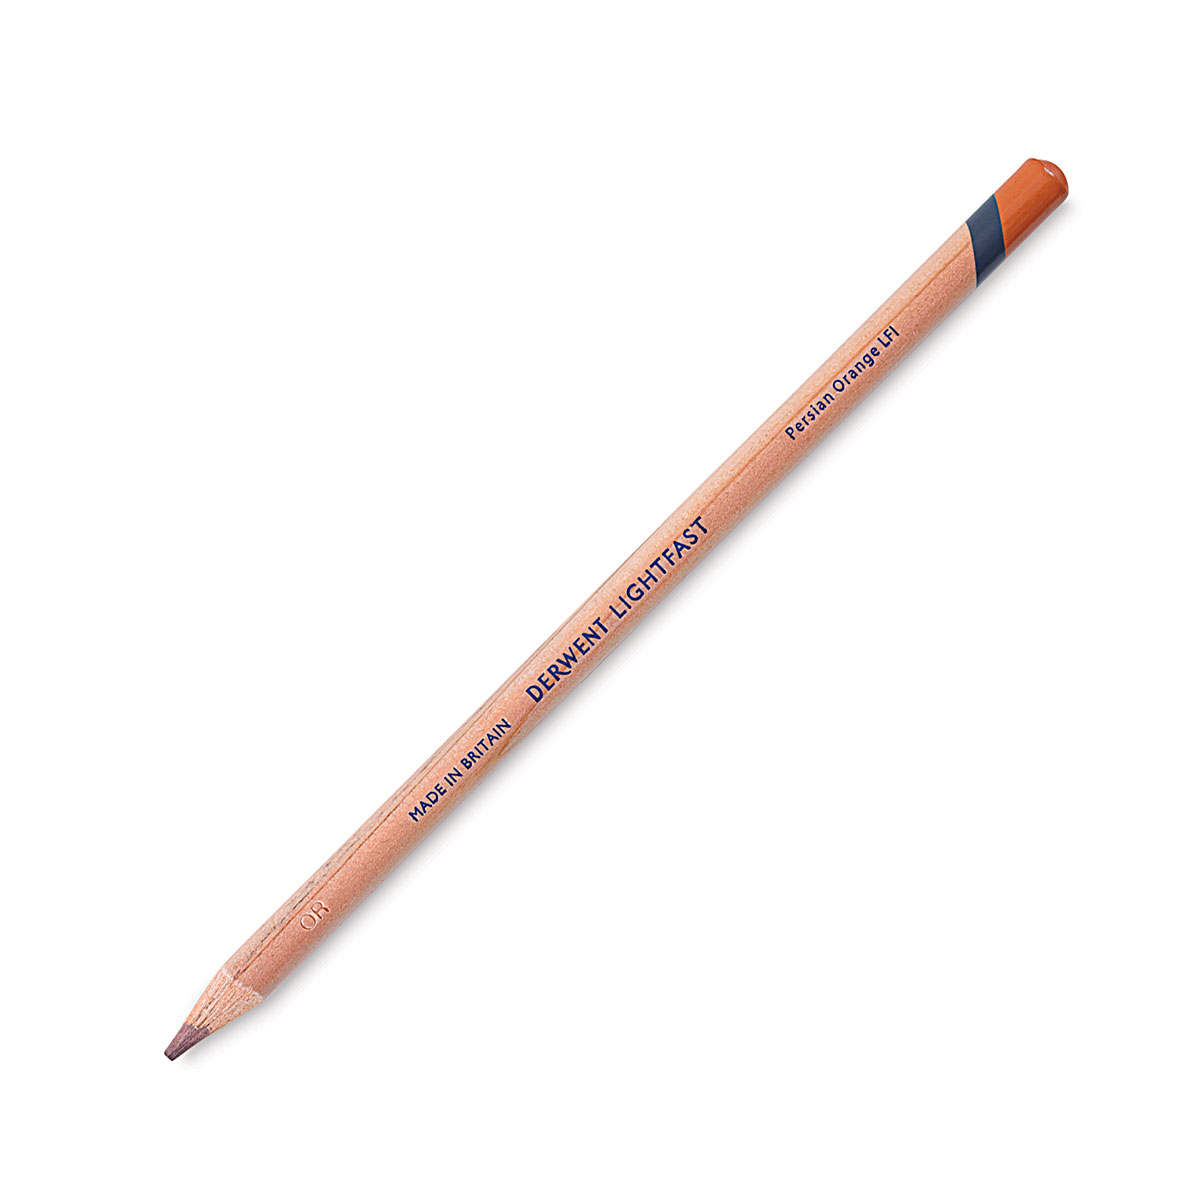 Derwent Lightfast Colored Pencil - Set of 24